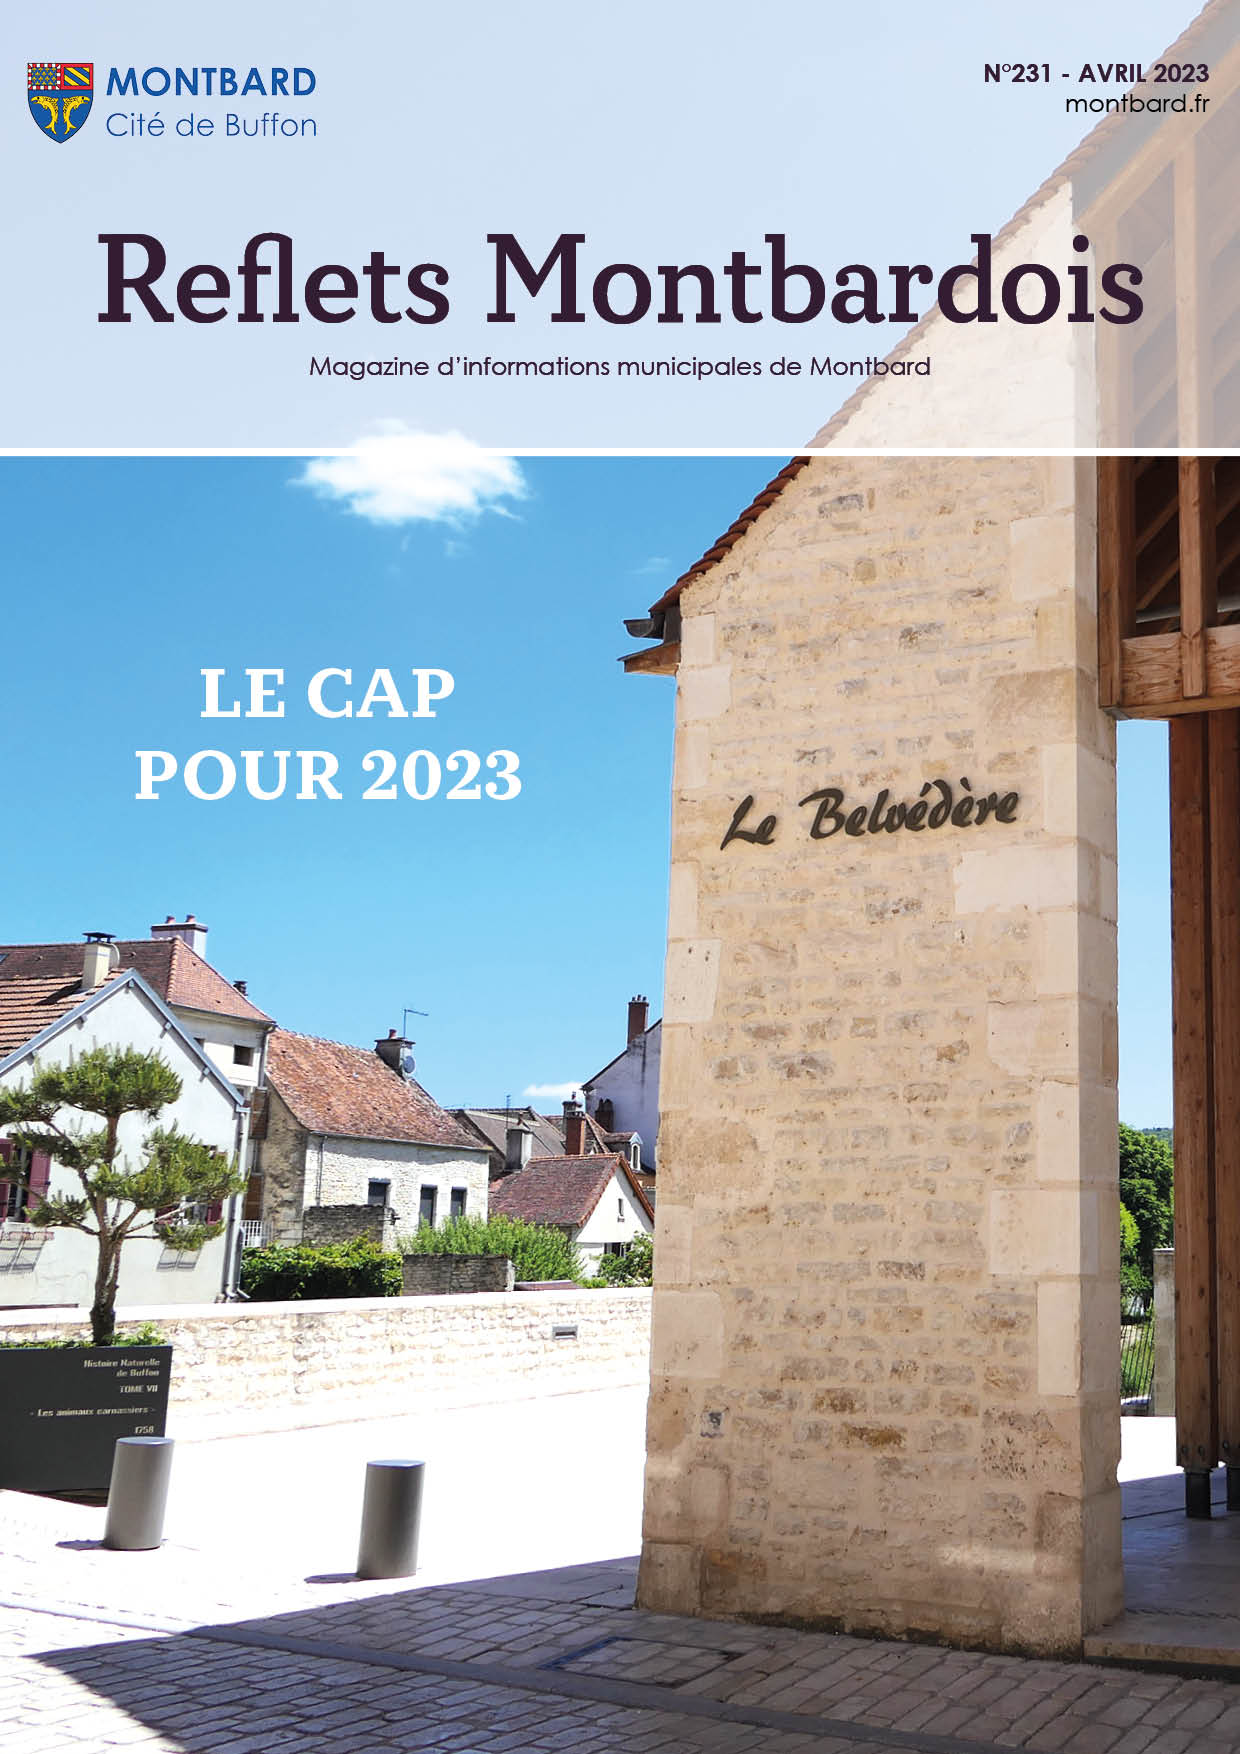 reflets Montbardois avril 2023